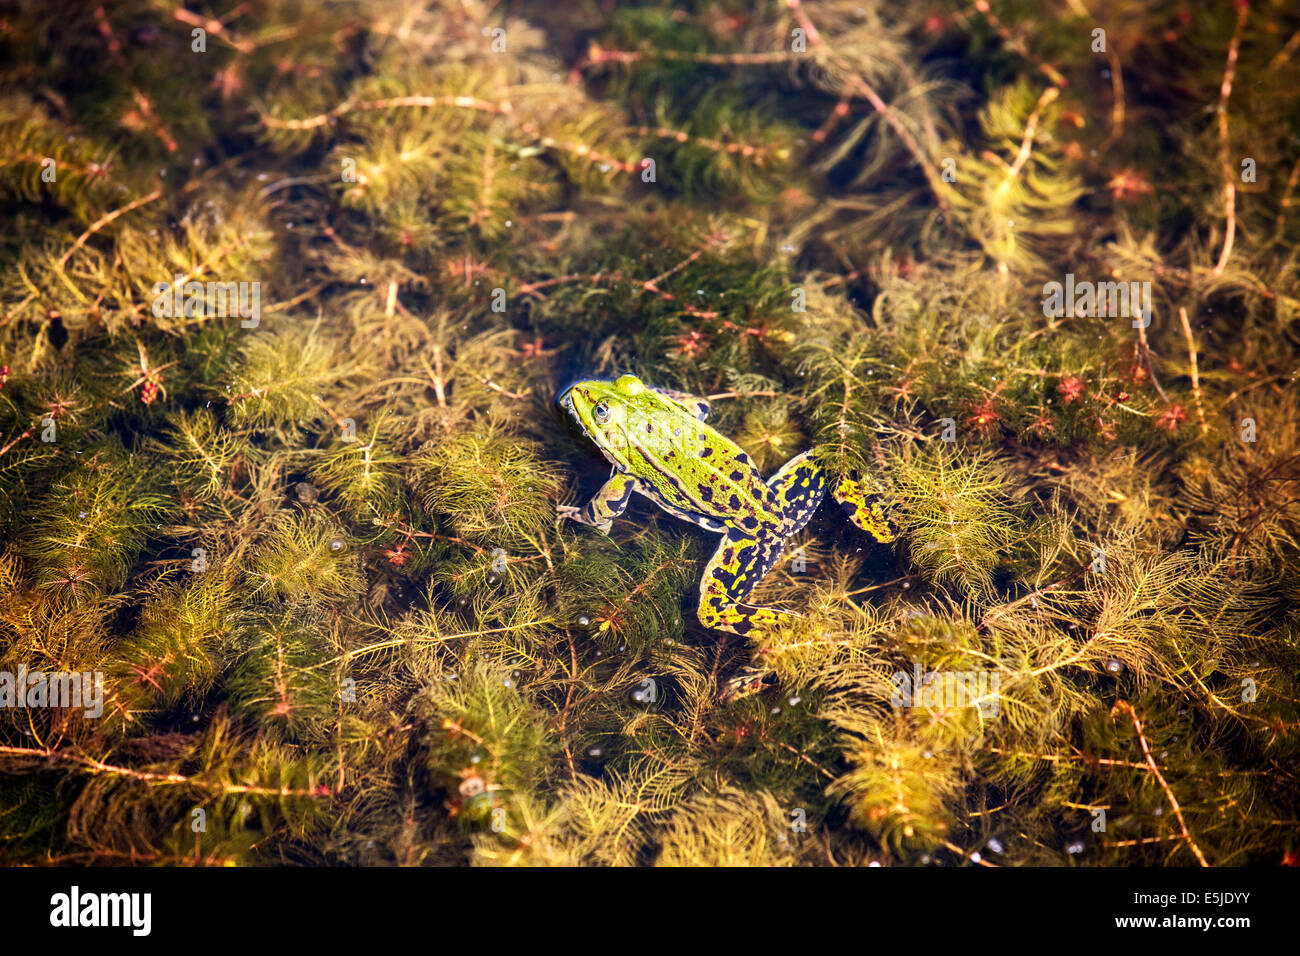 Netherlands, Marken, Marsh Frog, Pelophylax ridibundus in pool Stock Photo